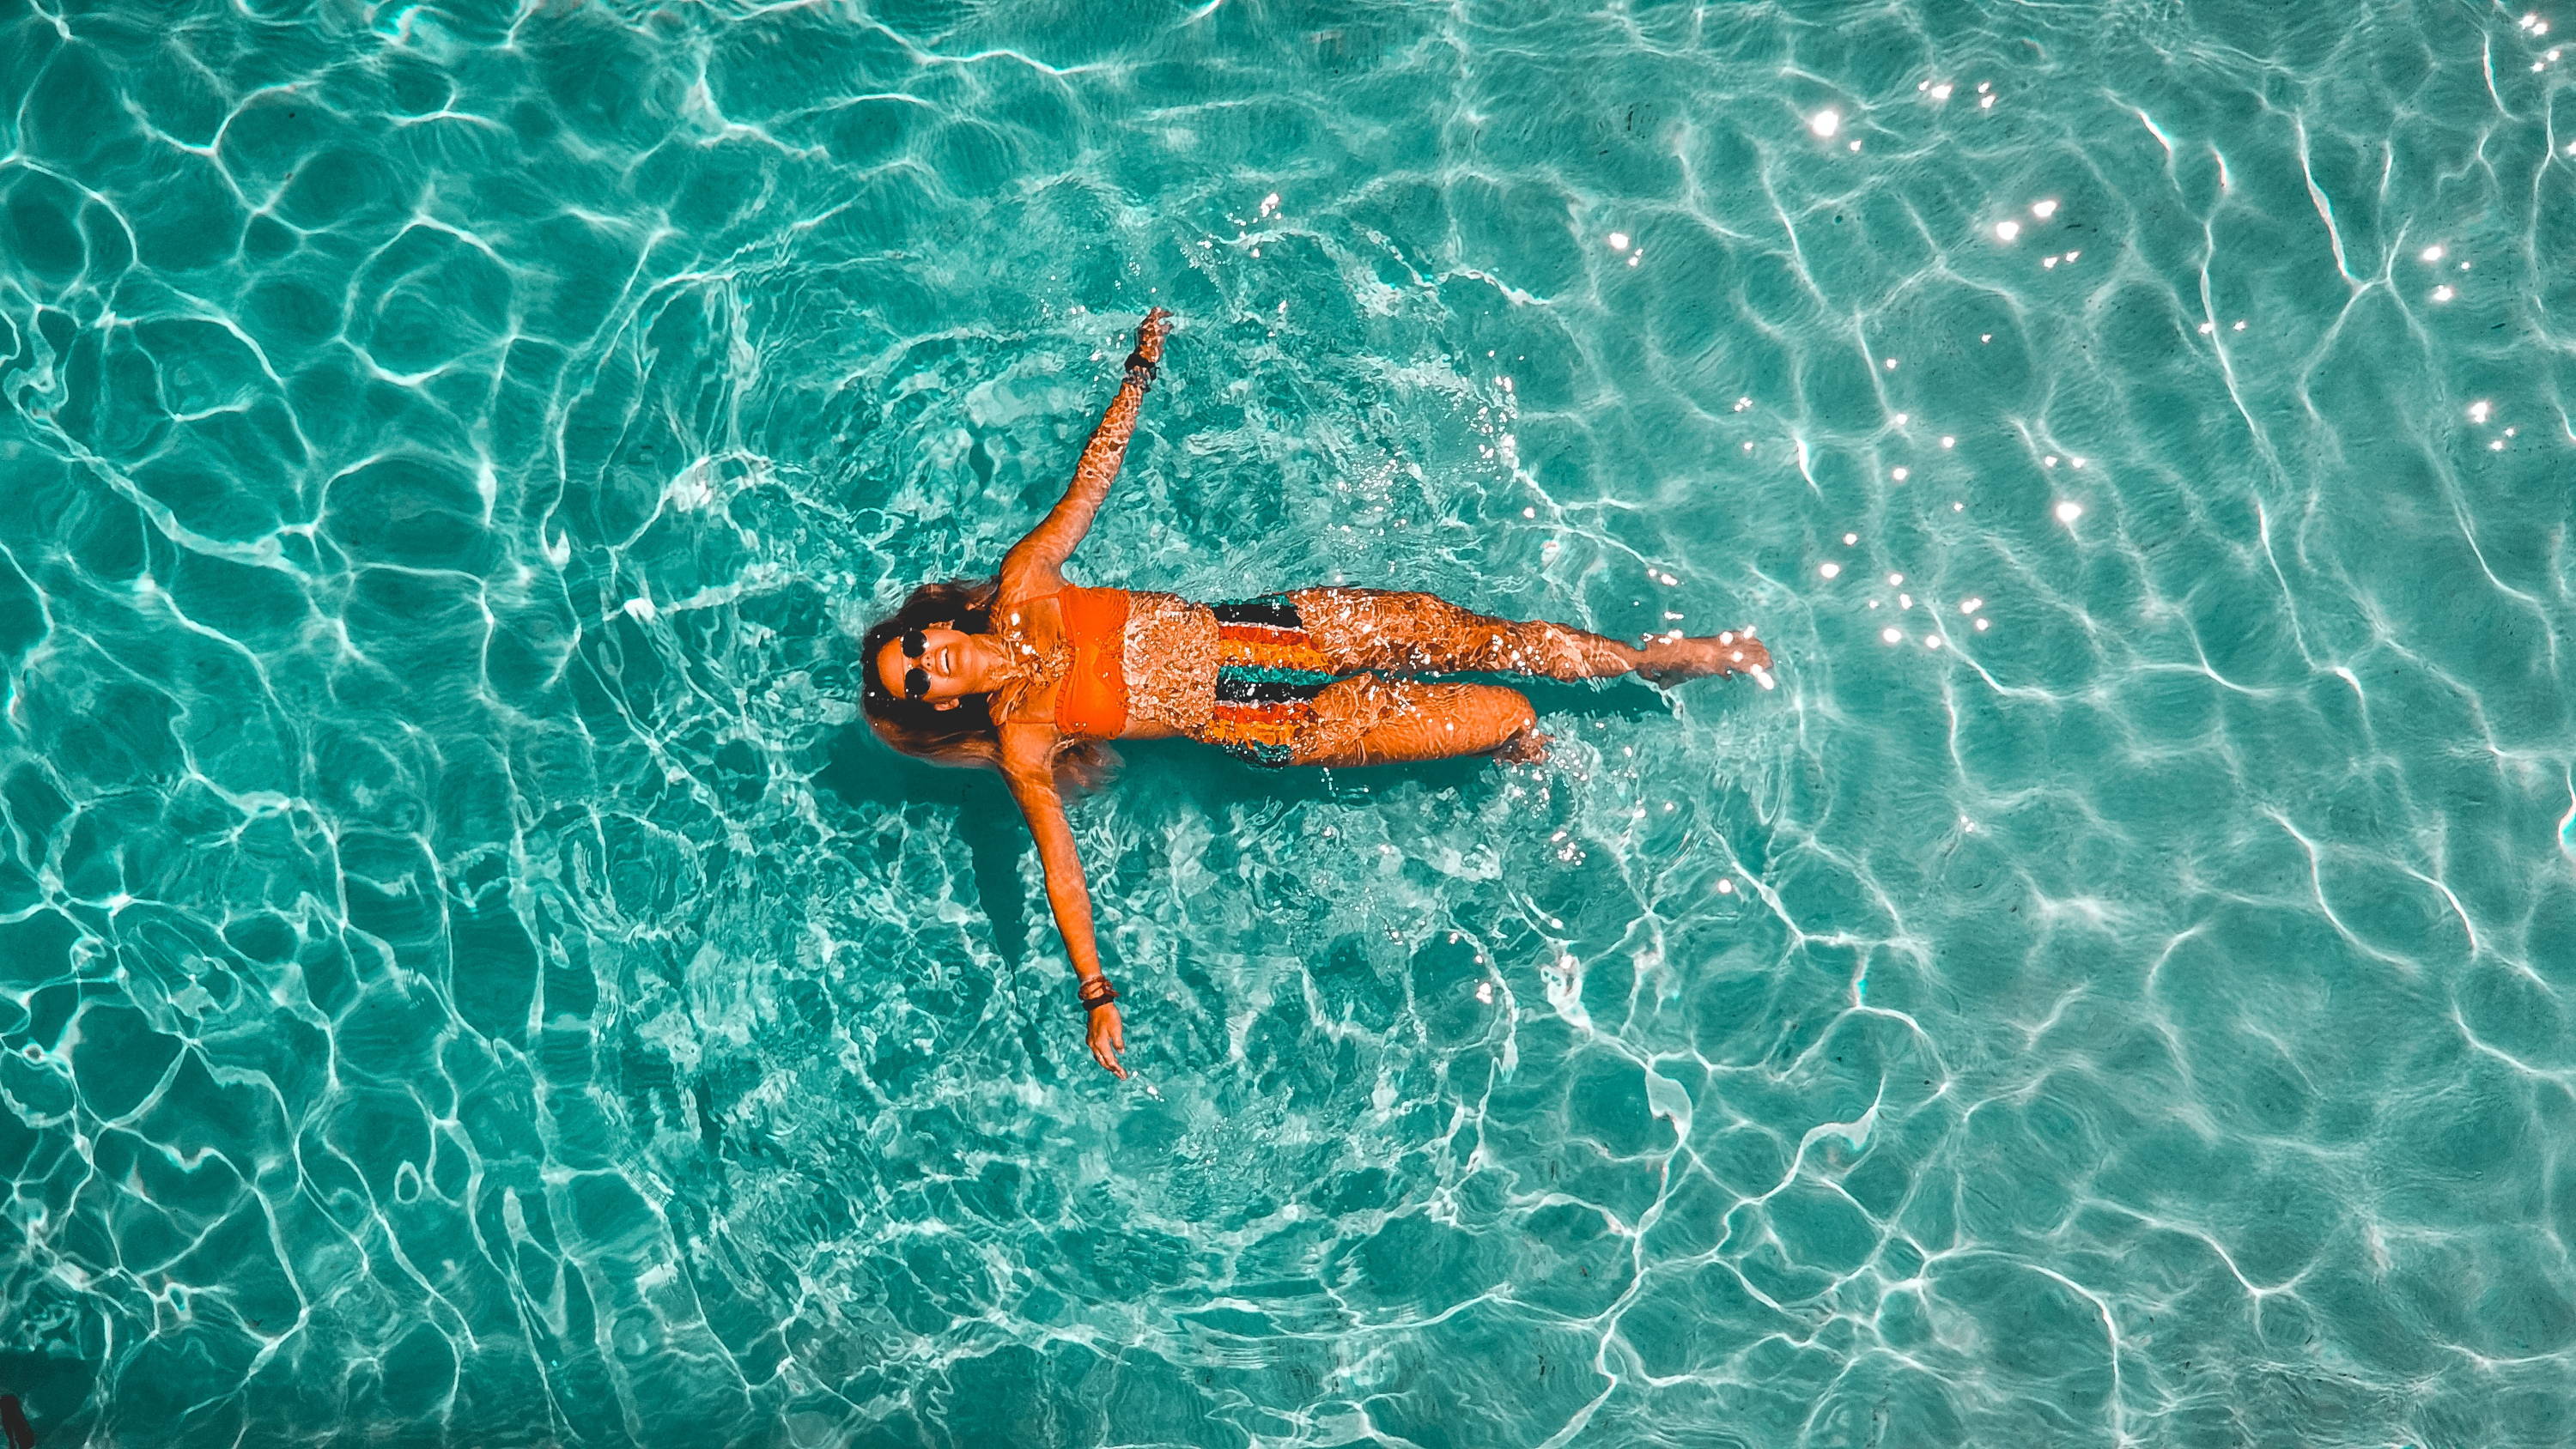 Woman swimming alone in body of water. Photo by Drew Dau on Unsplash